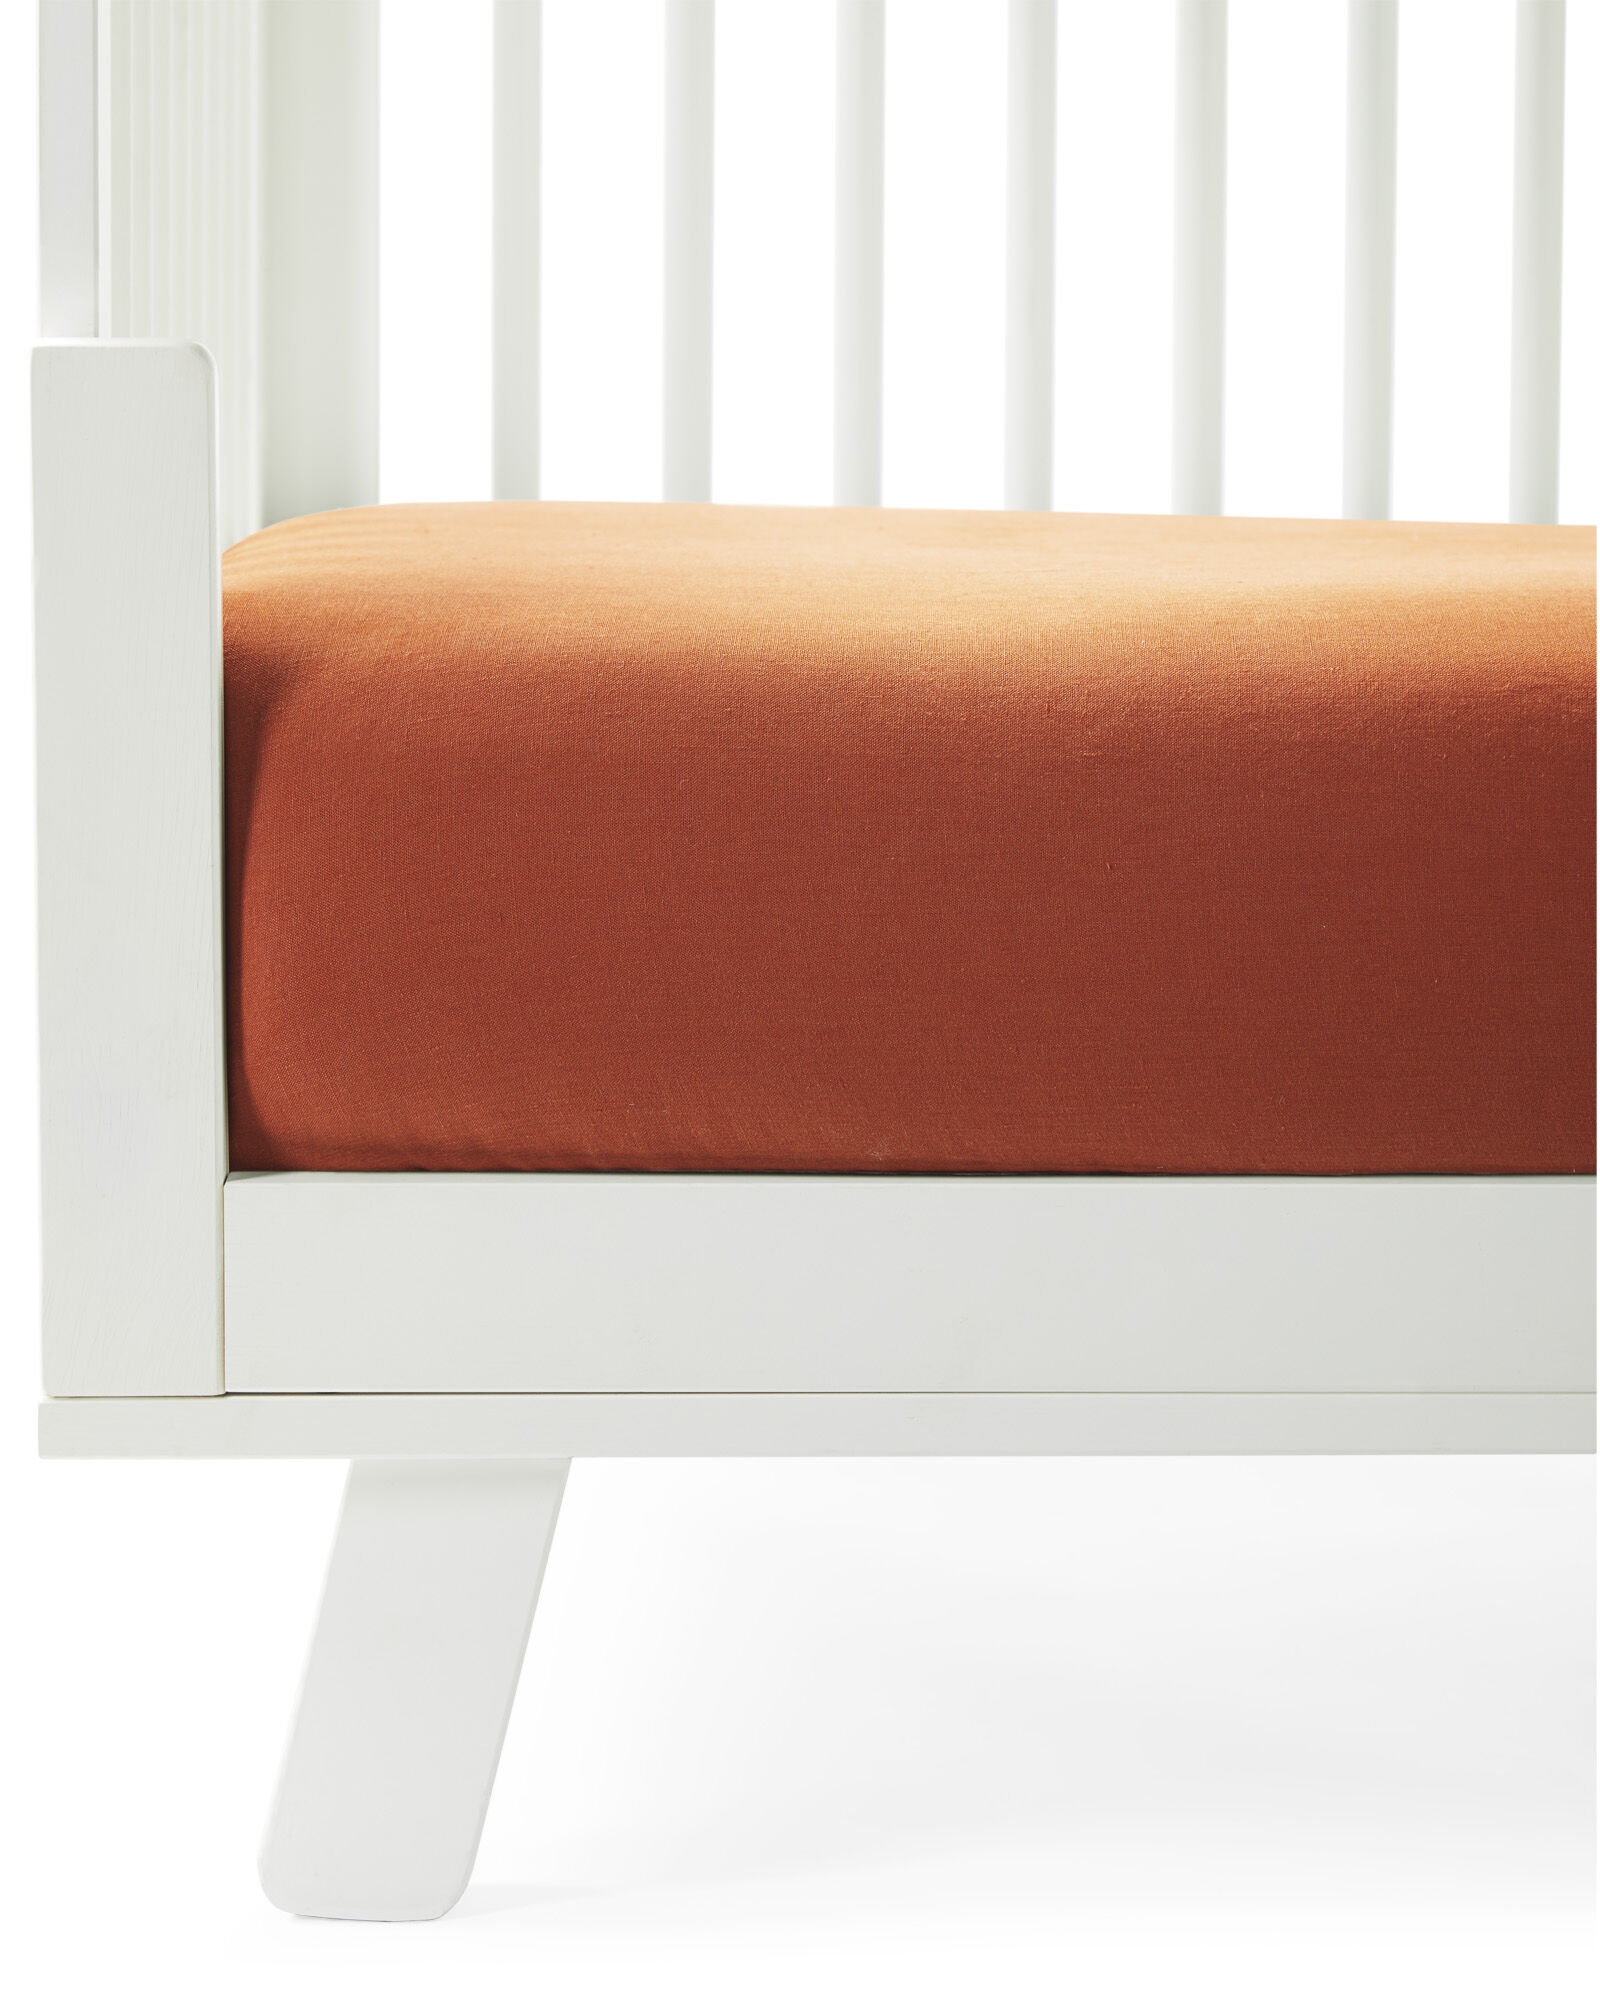 Positano Linen Crib Sheet - Image 0